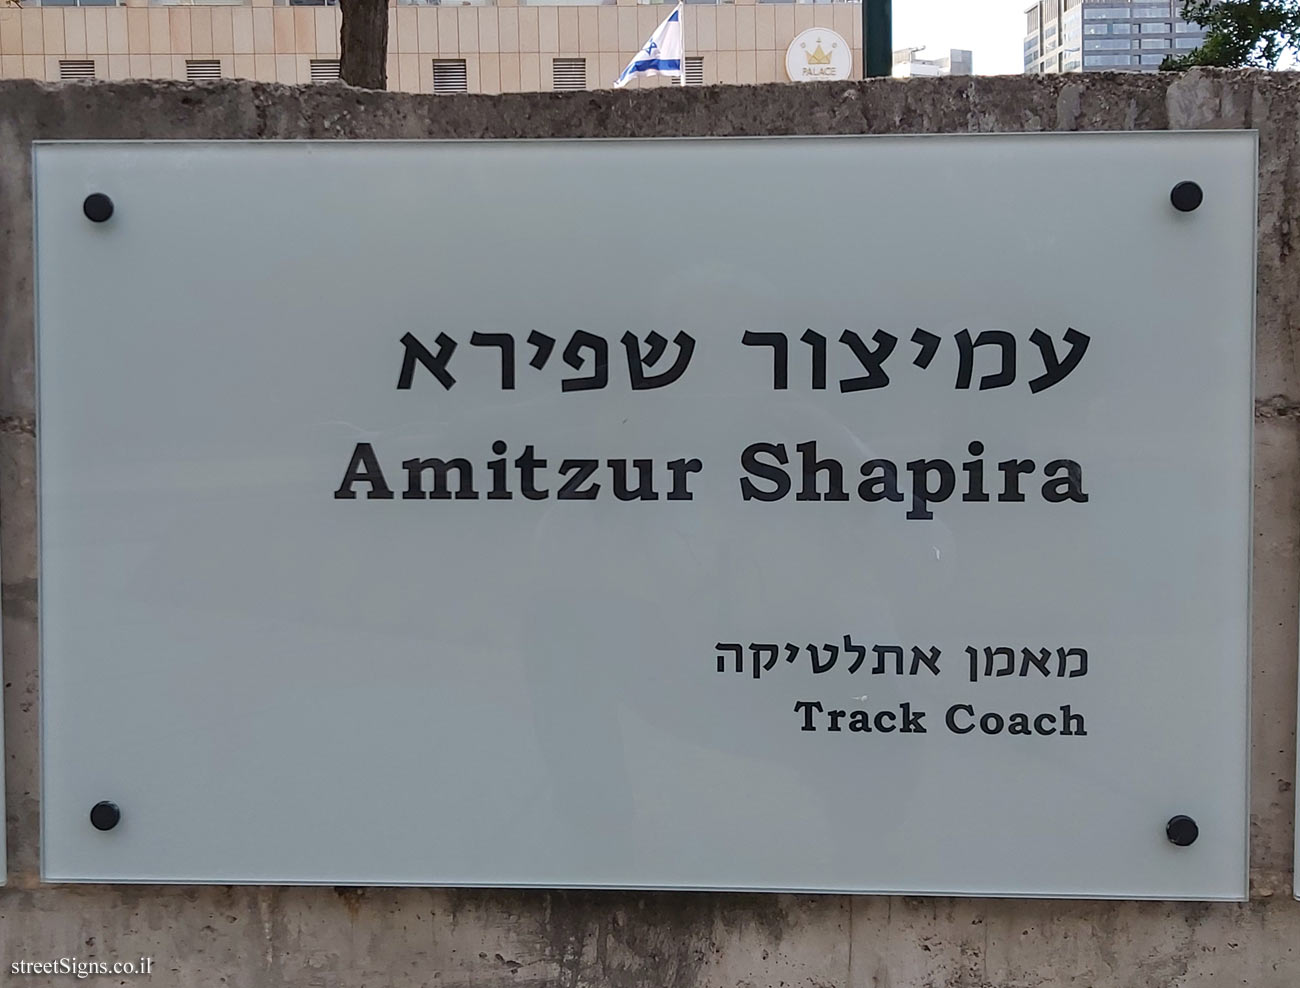 Tel Aviv - The eleventh square - Amitzur Shapira